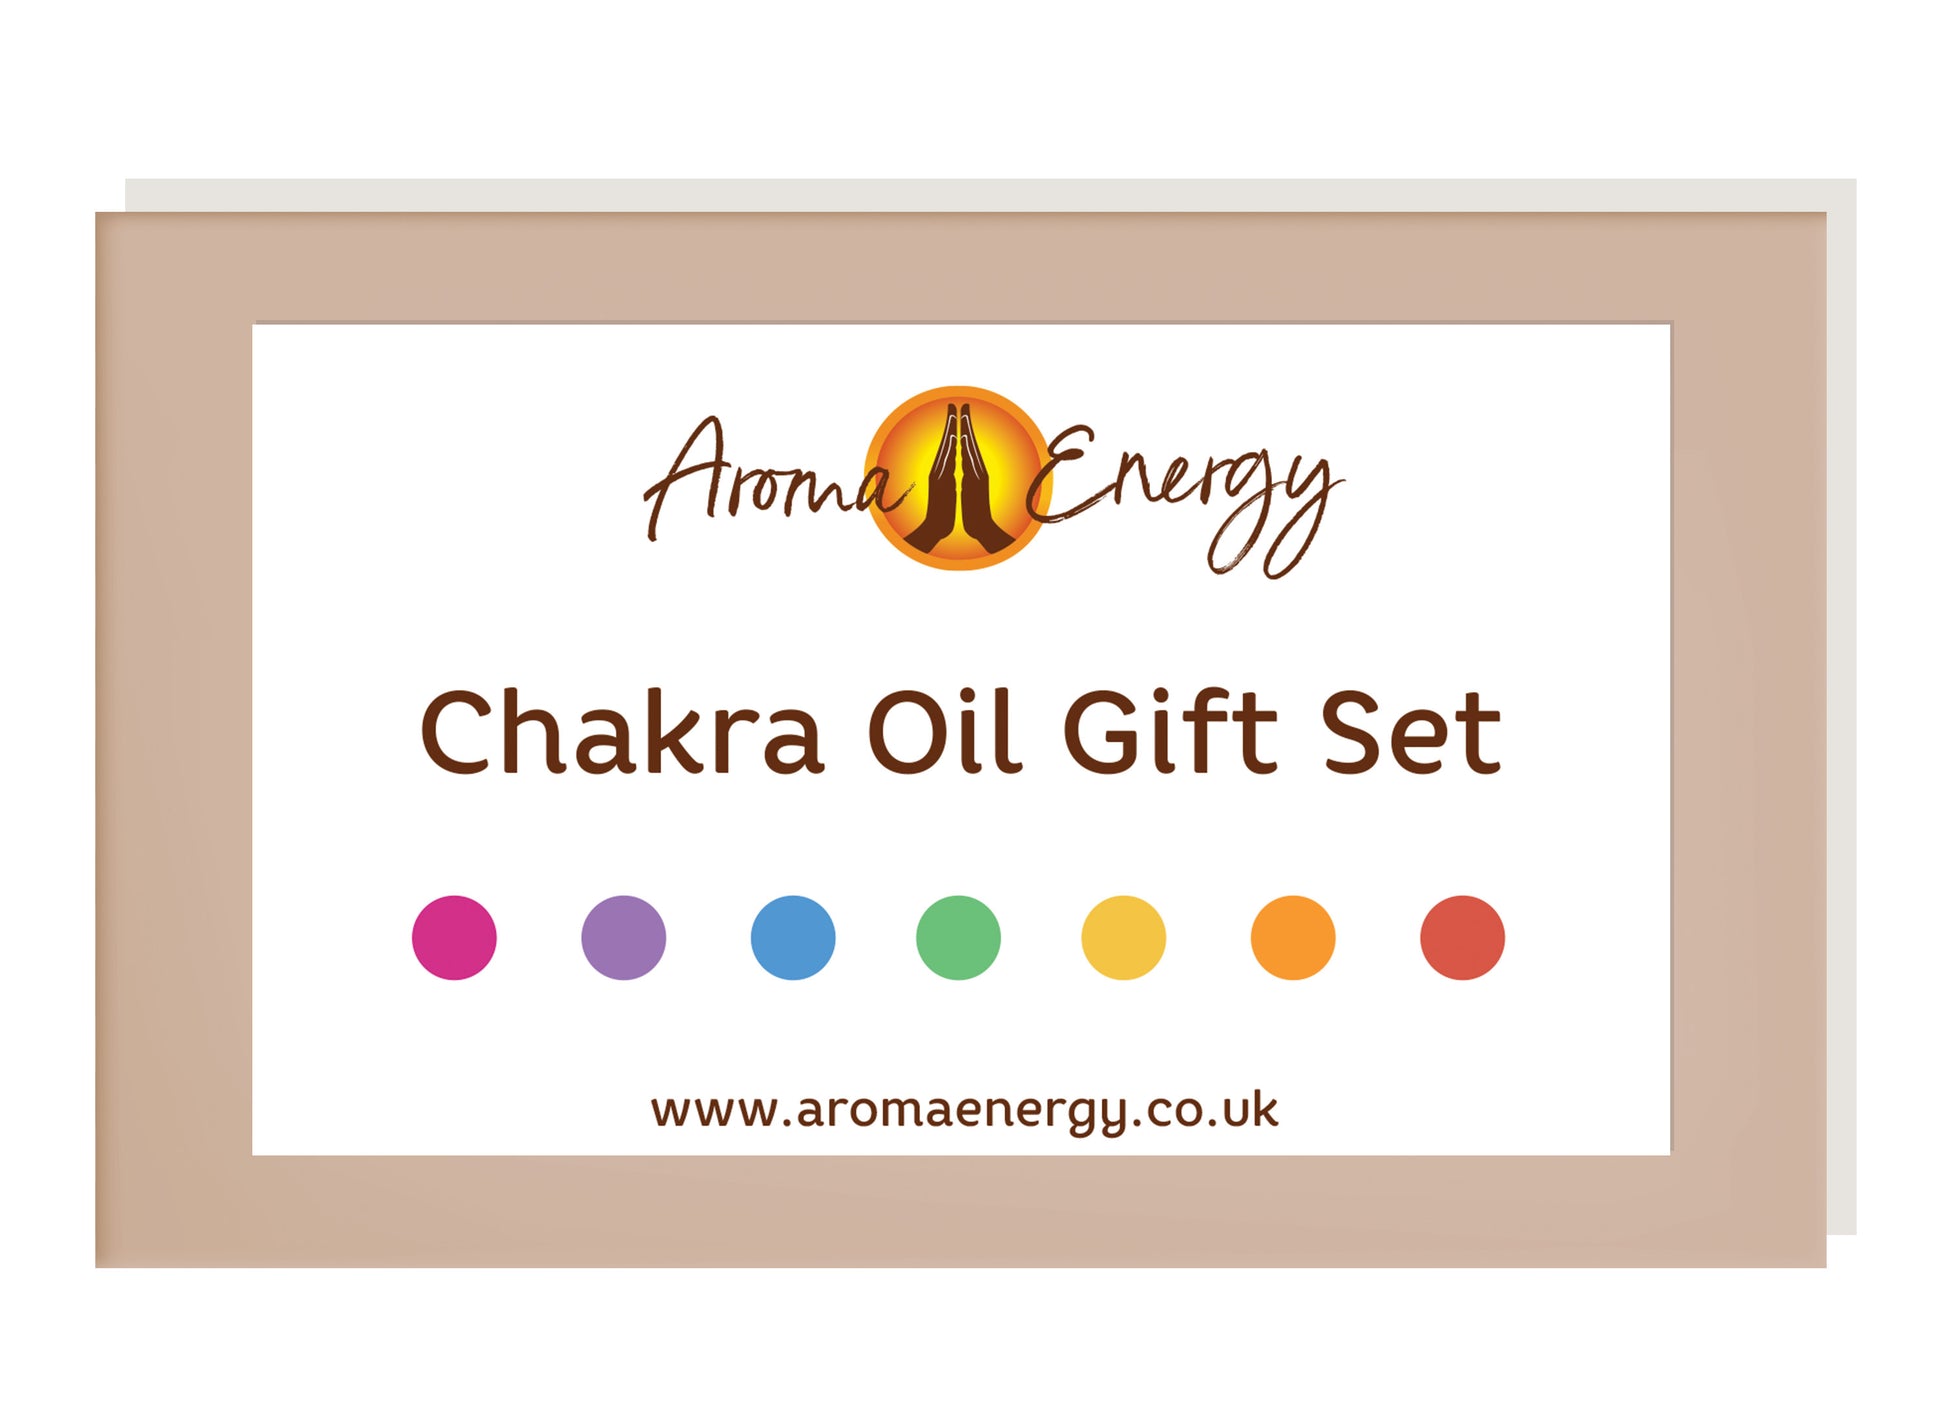 Crystal Chakra Oils - Essential Oil Gift Set - Aroma Energy